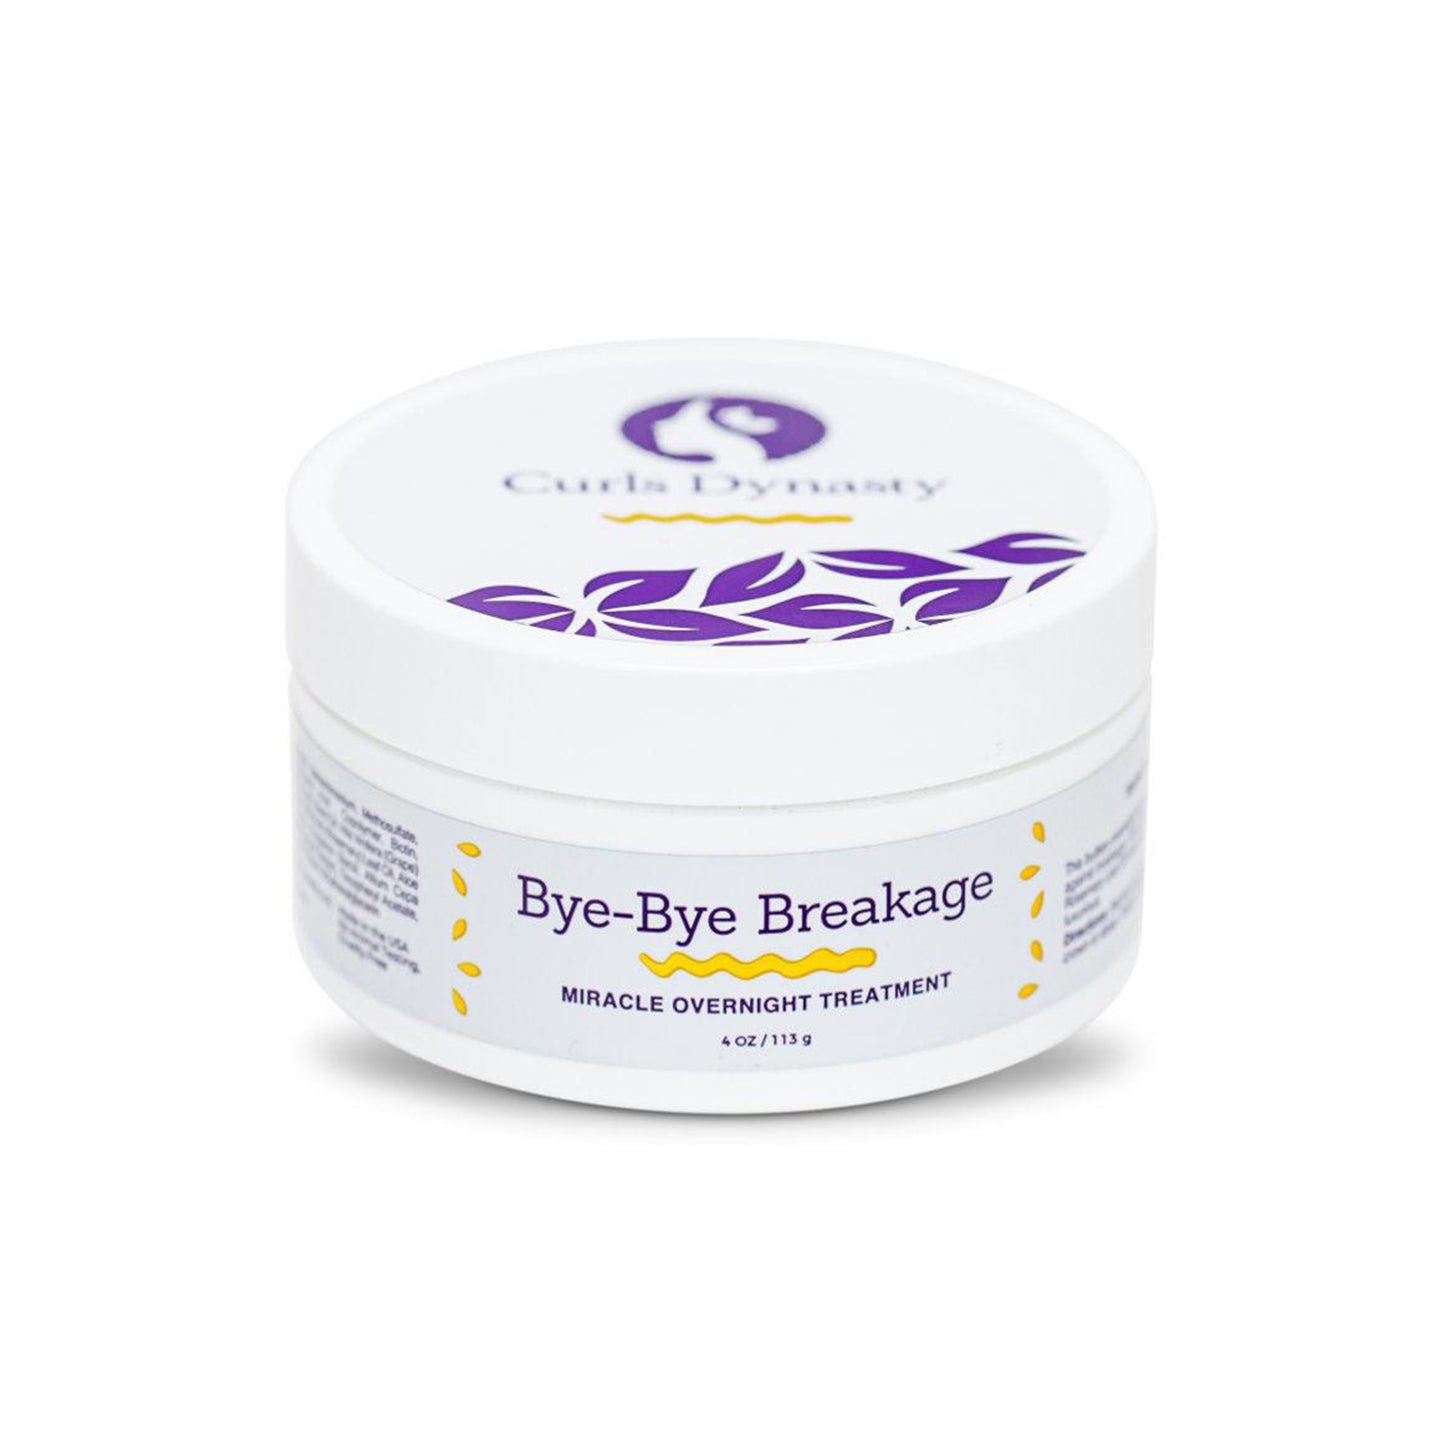 Bye-Bye Breakage Miracle Overnight Treatment